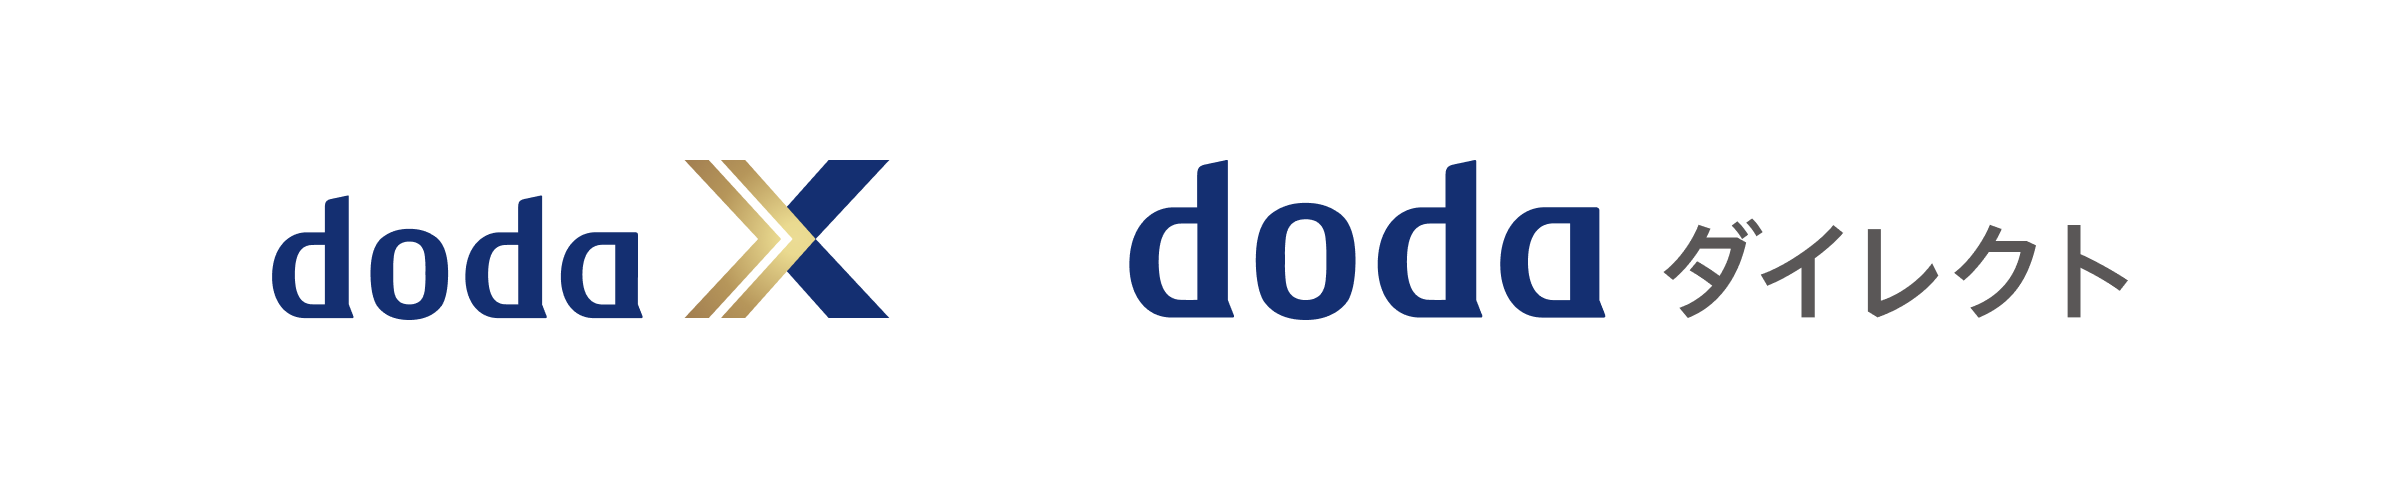 dodax dodaダイレクト　サービスロゴ